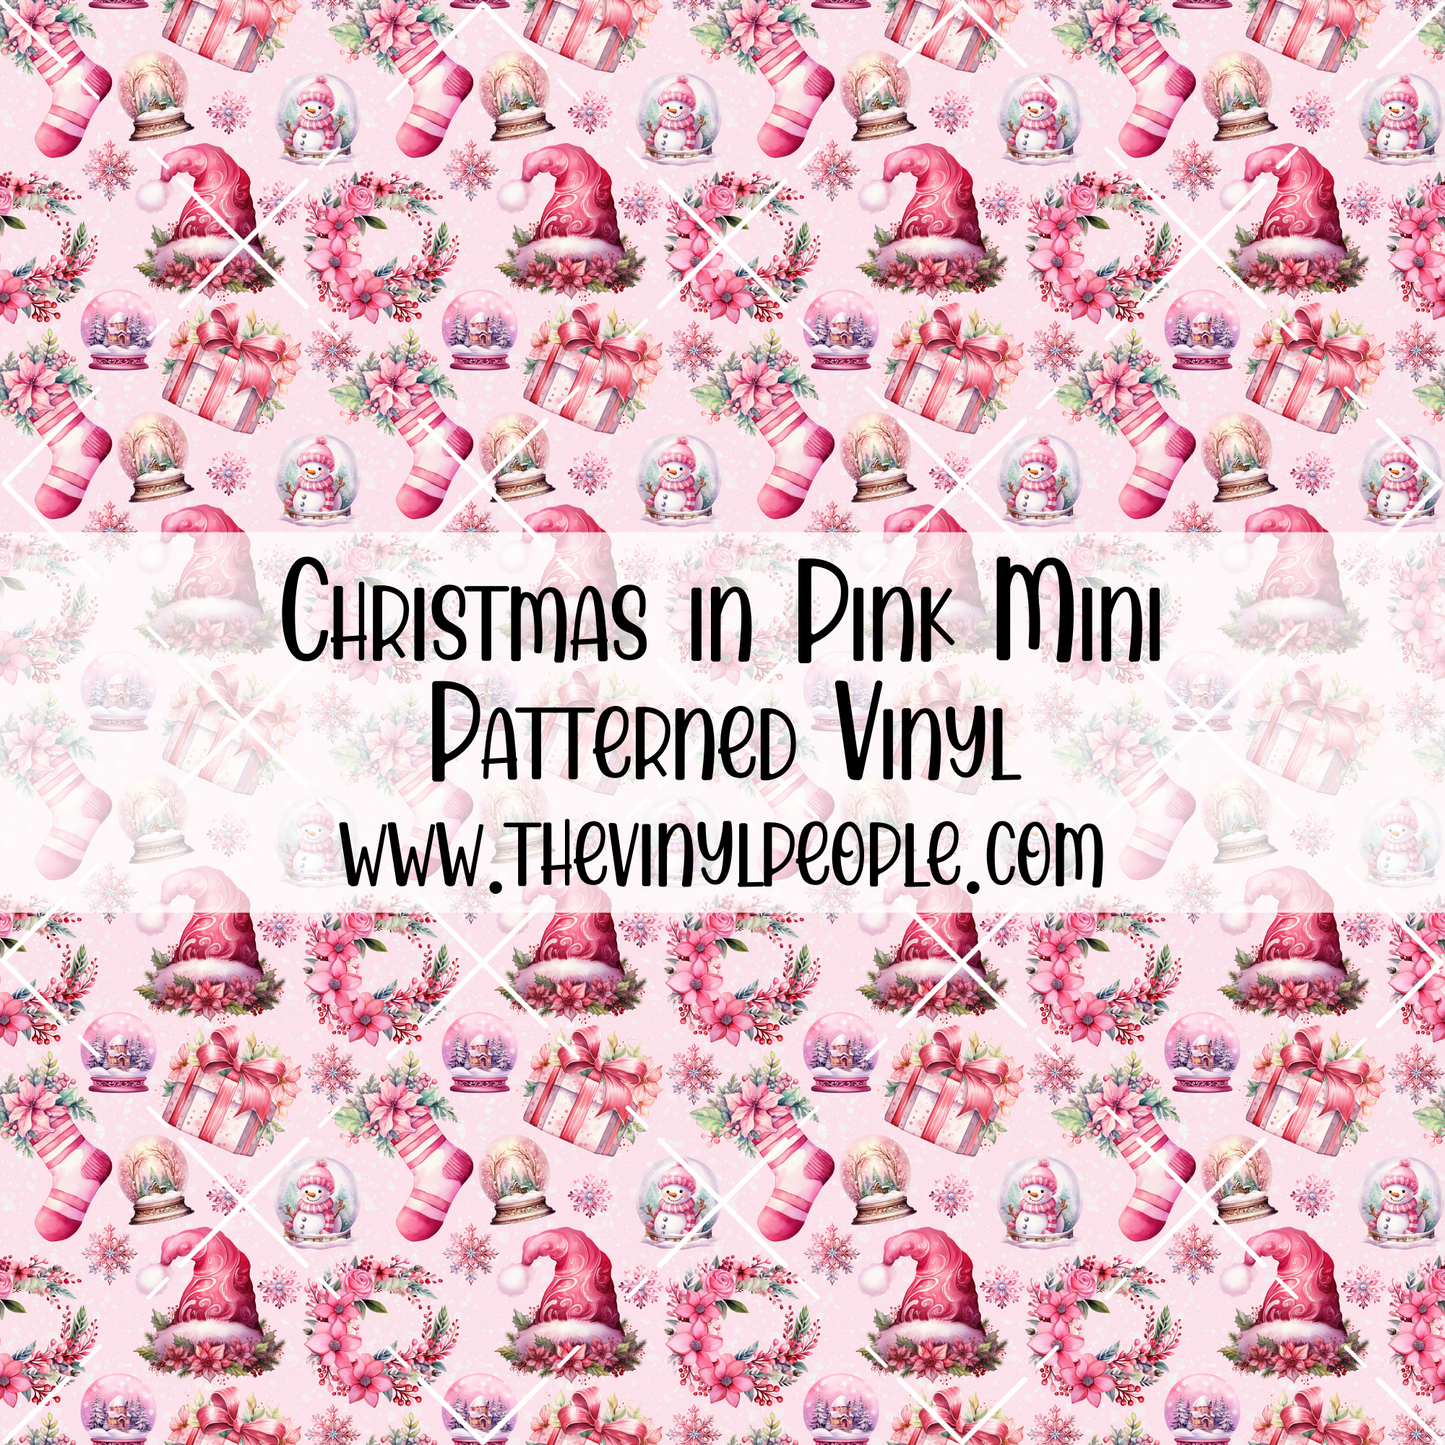 Christmas in Pink Patterned Vinyl